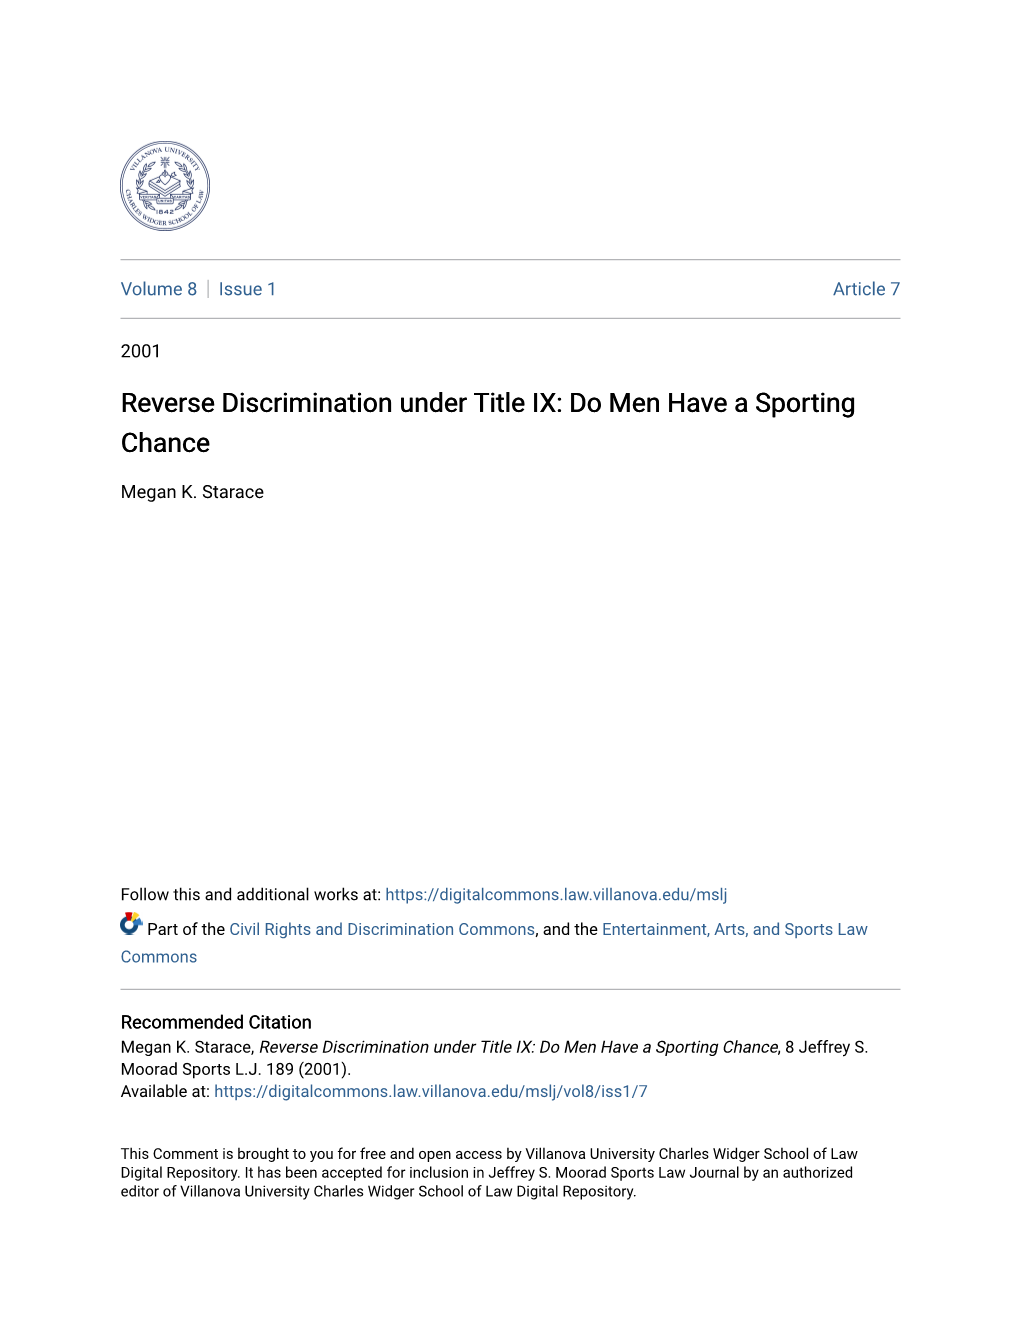 Reverse Discrimination Under Title IX: Do Men Have a Sporting Chance